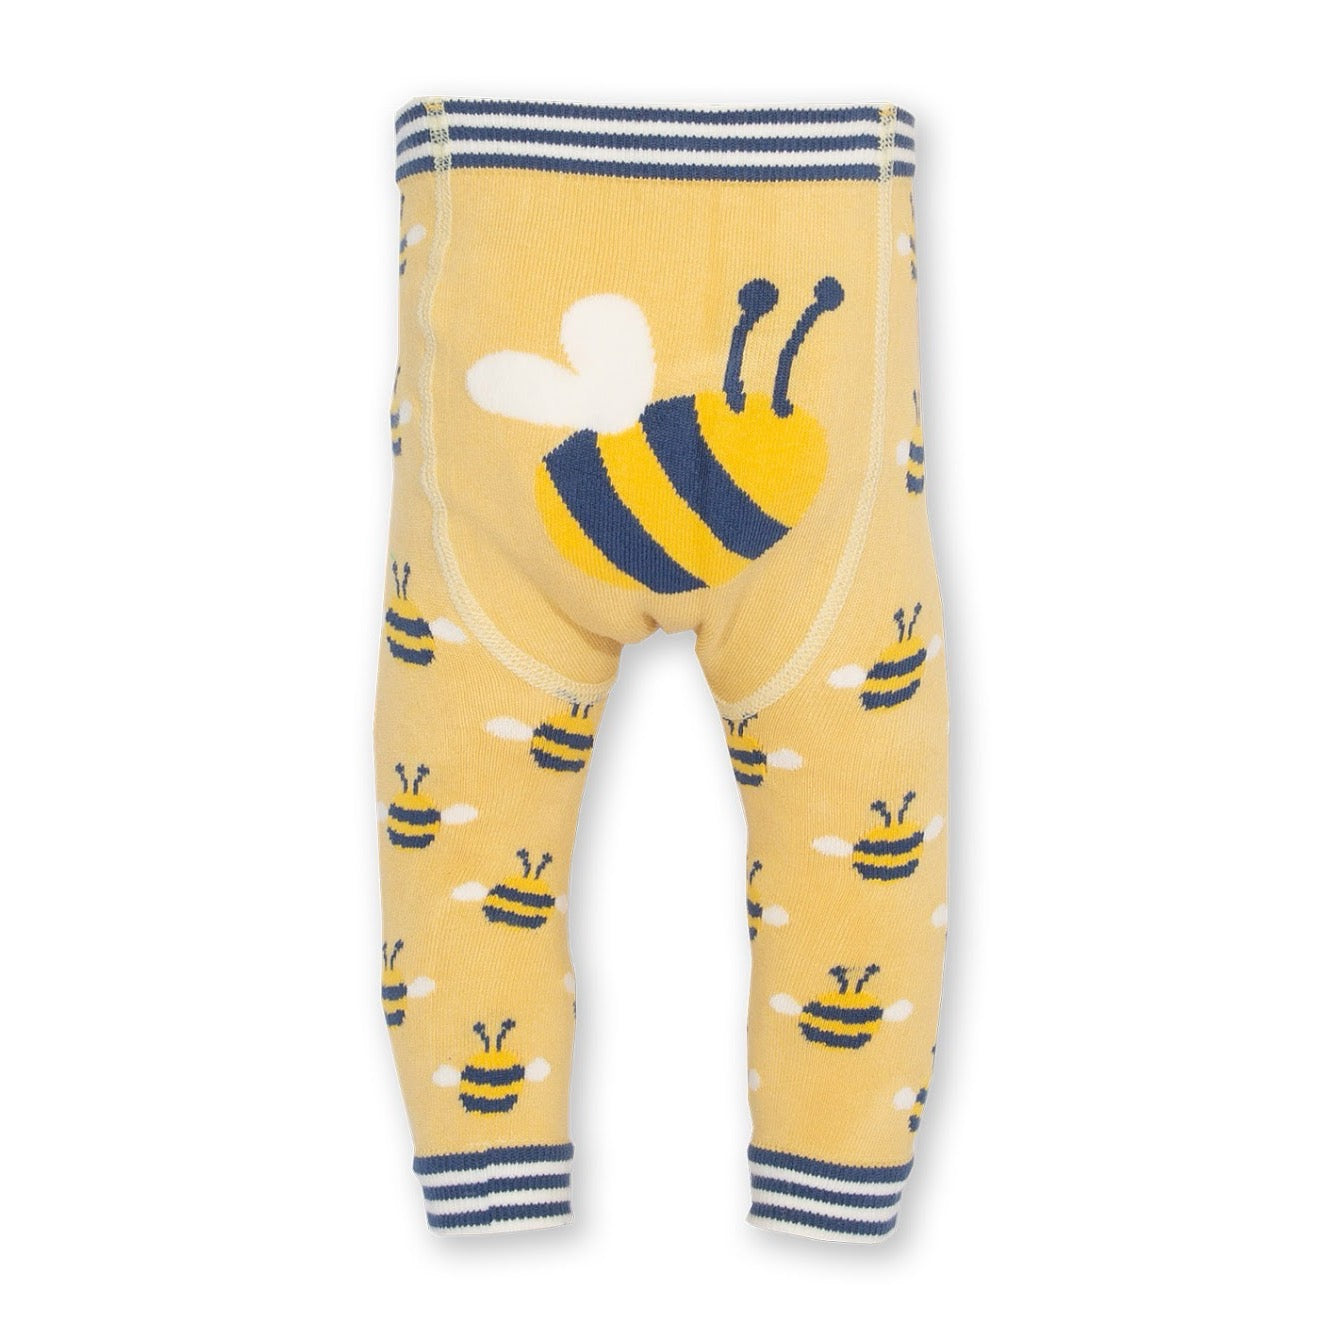 Kite Bumble Infant Knitted Leggings 41-3628 Clothing 0-6M / Yellow,6-12M / Yellow,12-24M / Yellow